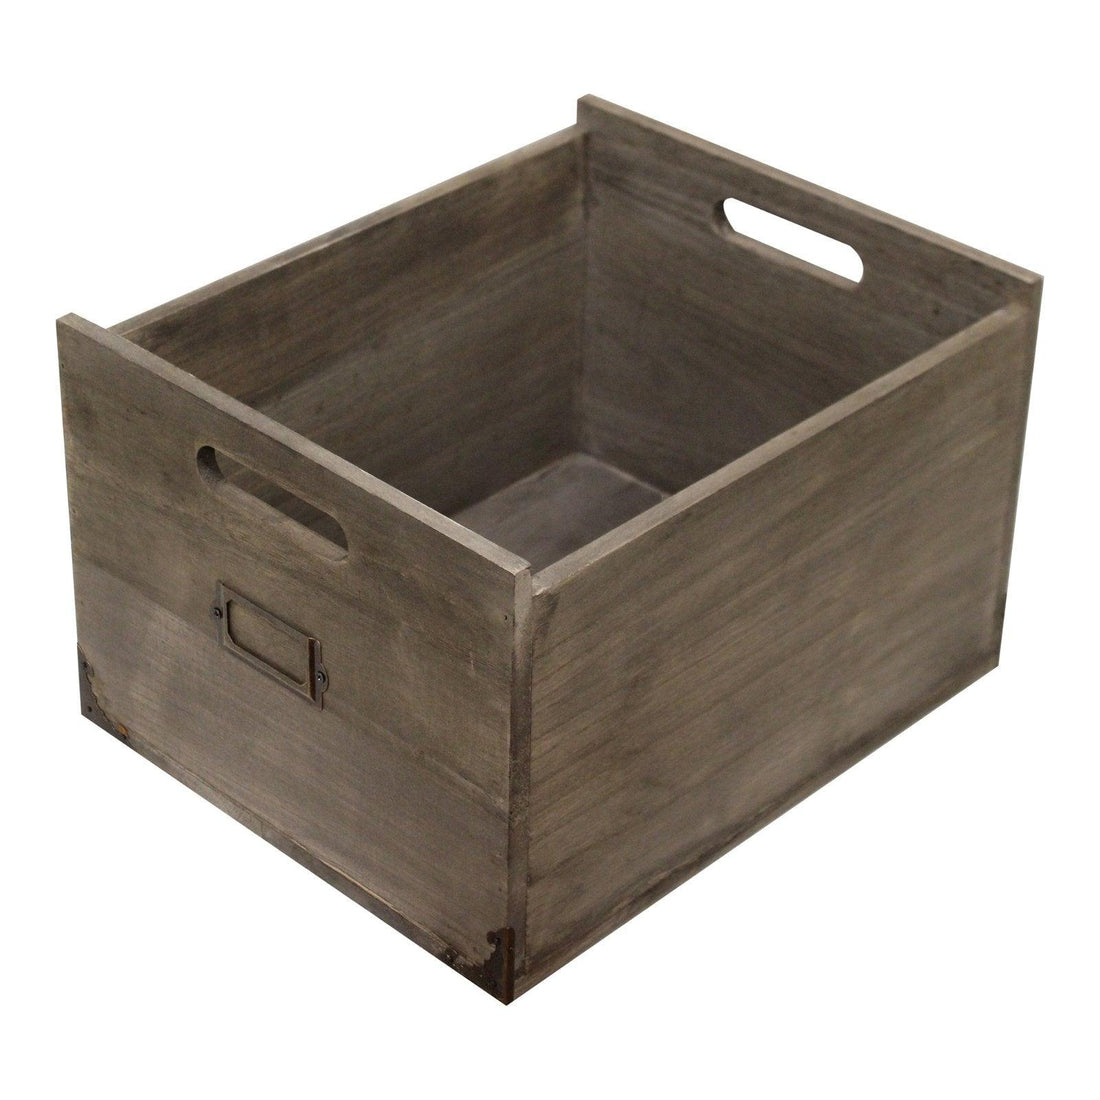 Wooden Office Storage Box, 26x32x20cm. - £49.99 - Office Storage Solutions 